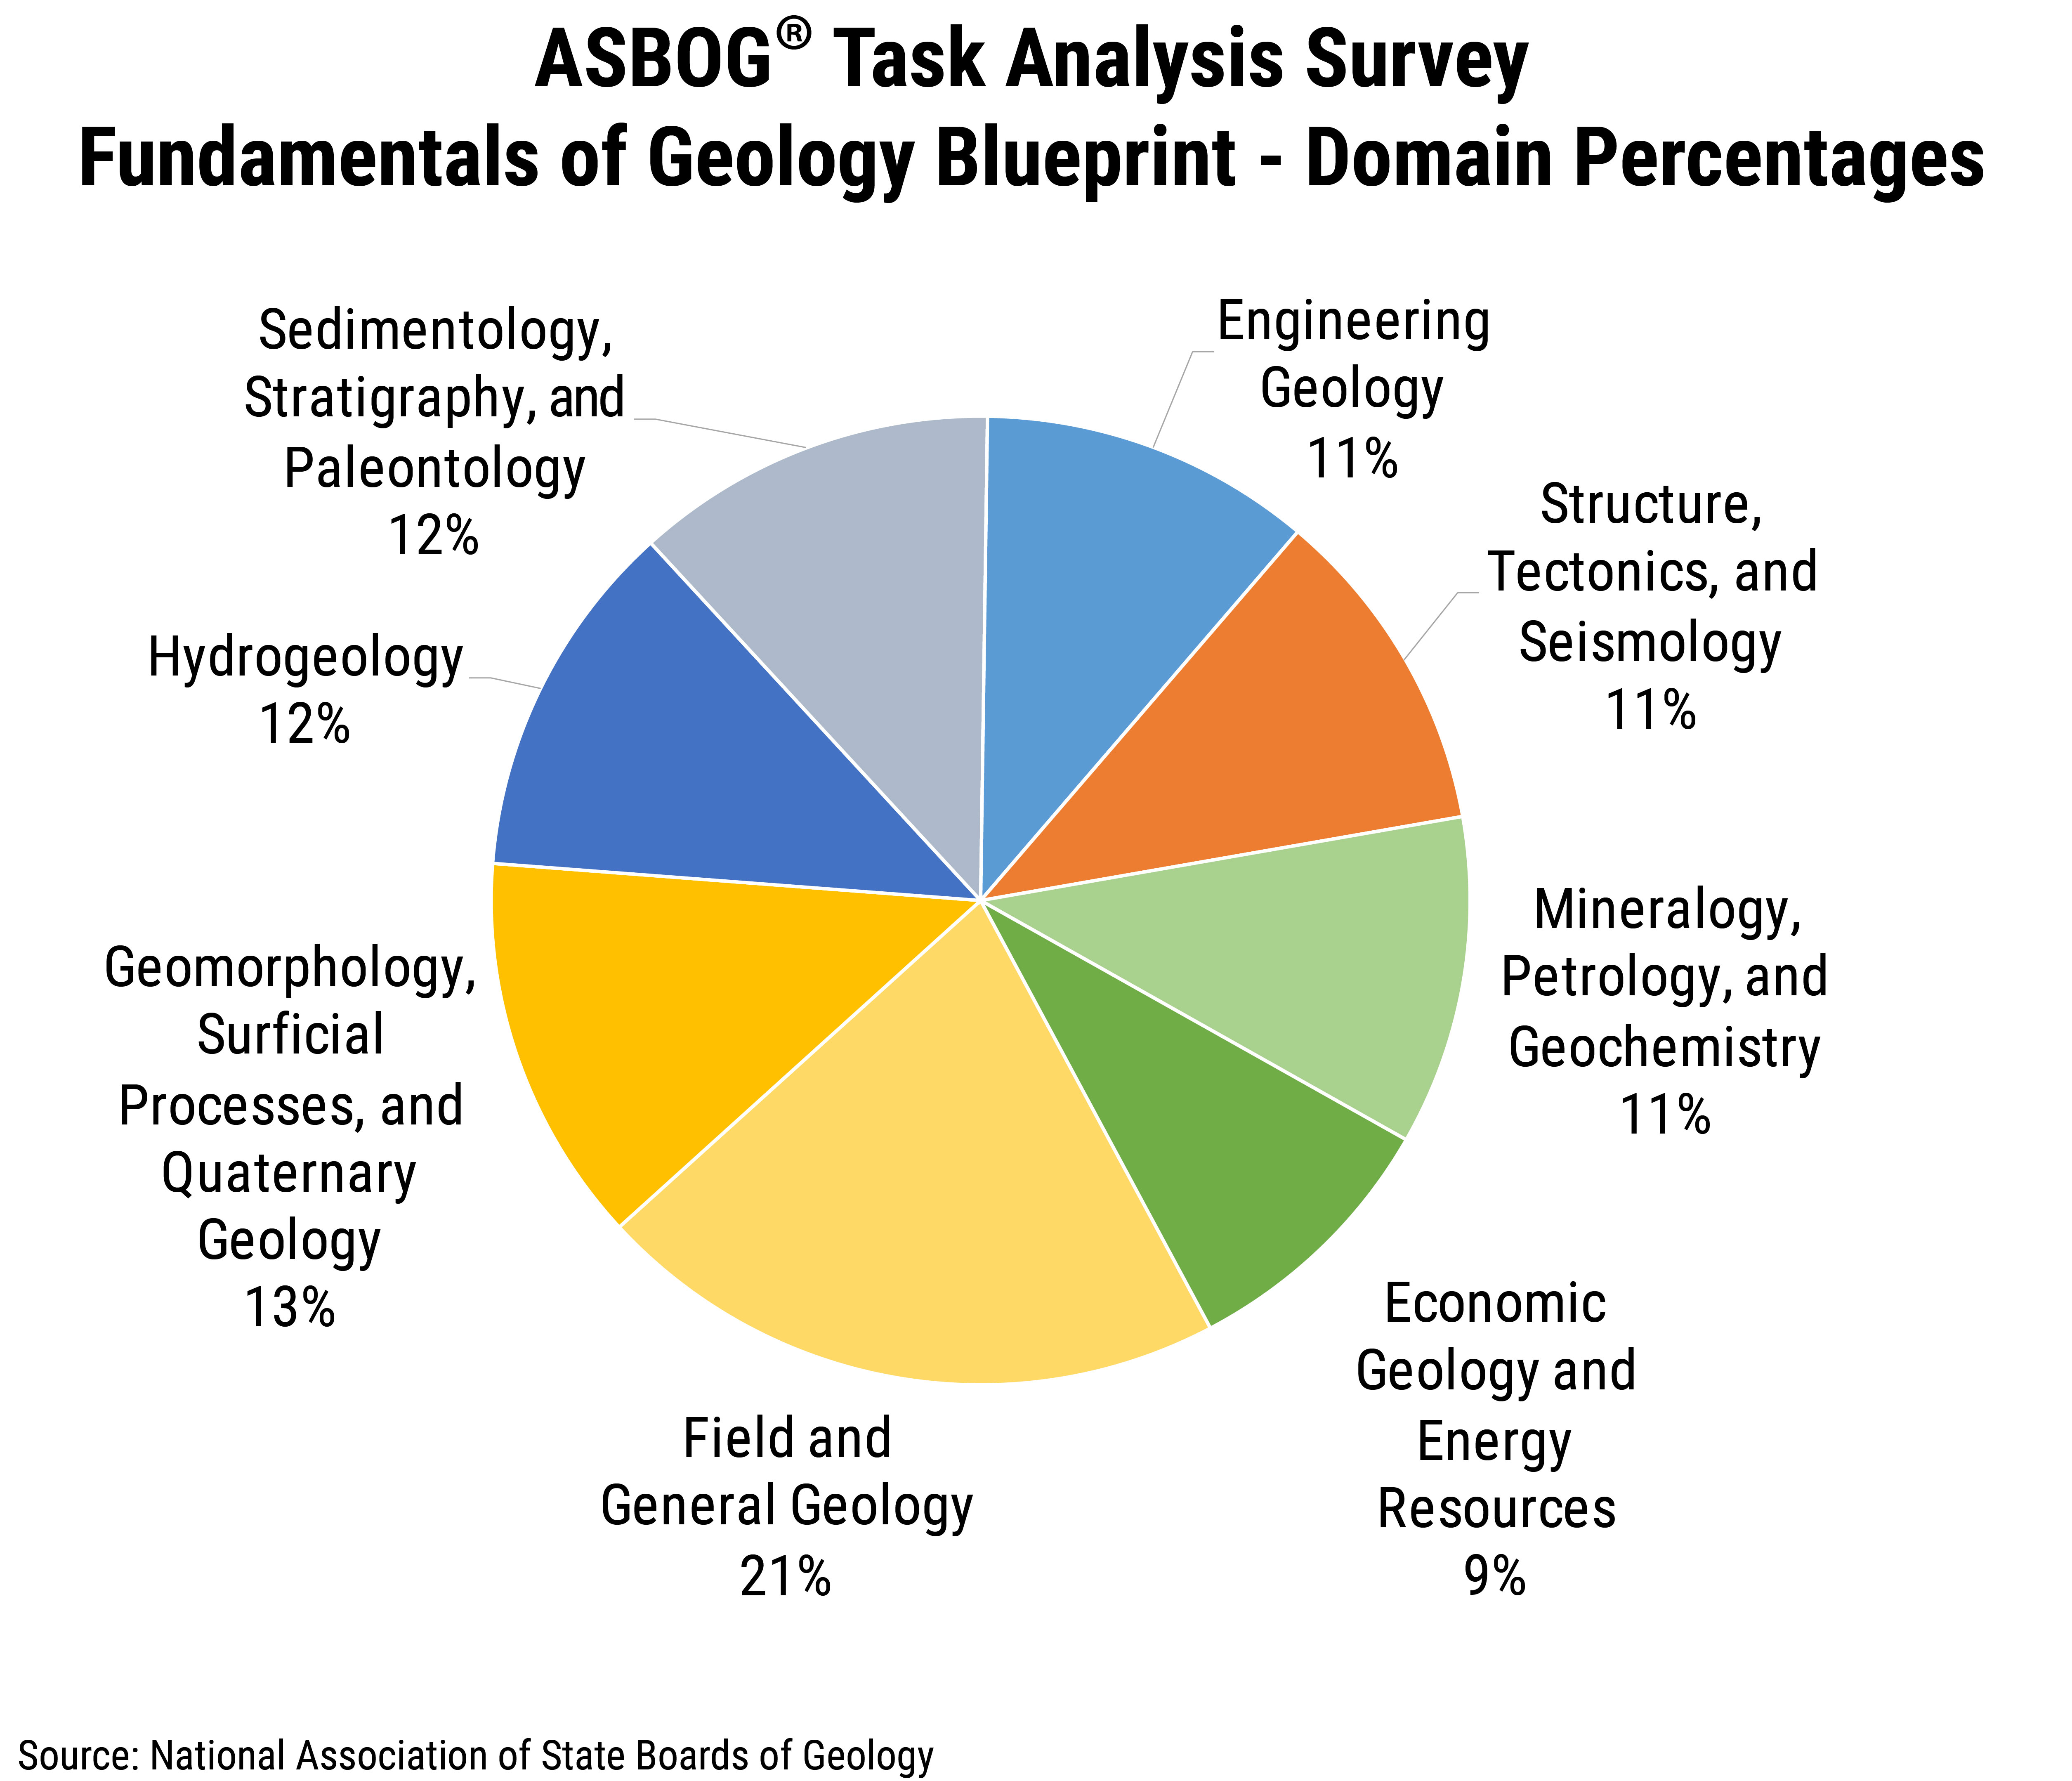 FS_2019-002 chart 3: ASBOG® Task Analysis Survey Fundamentals of Geology Blueprint - Domain Percentages (Credit: ASBOG)